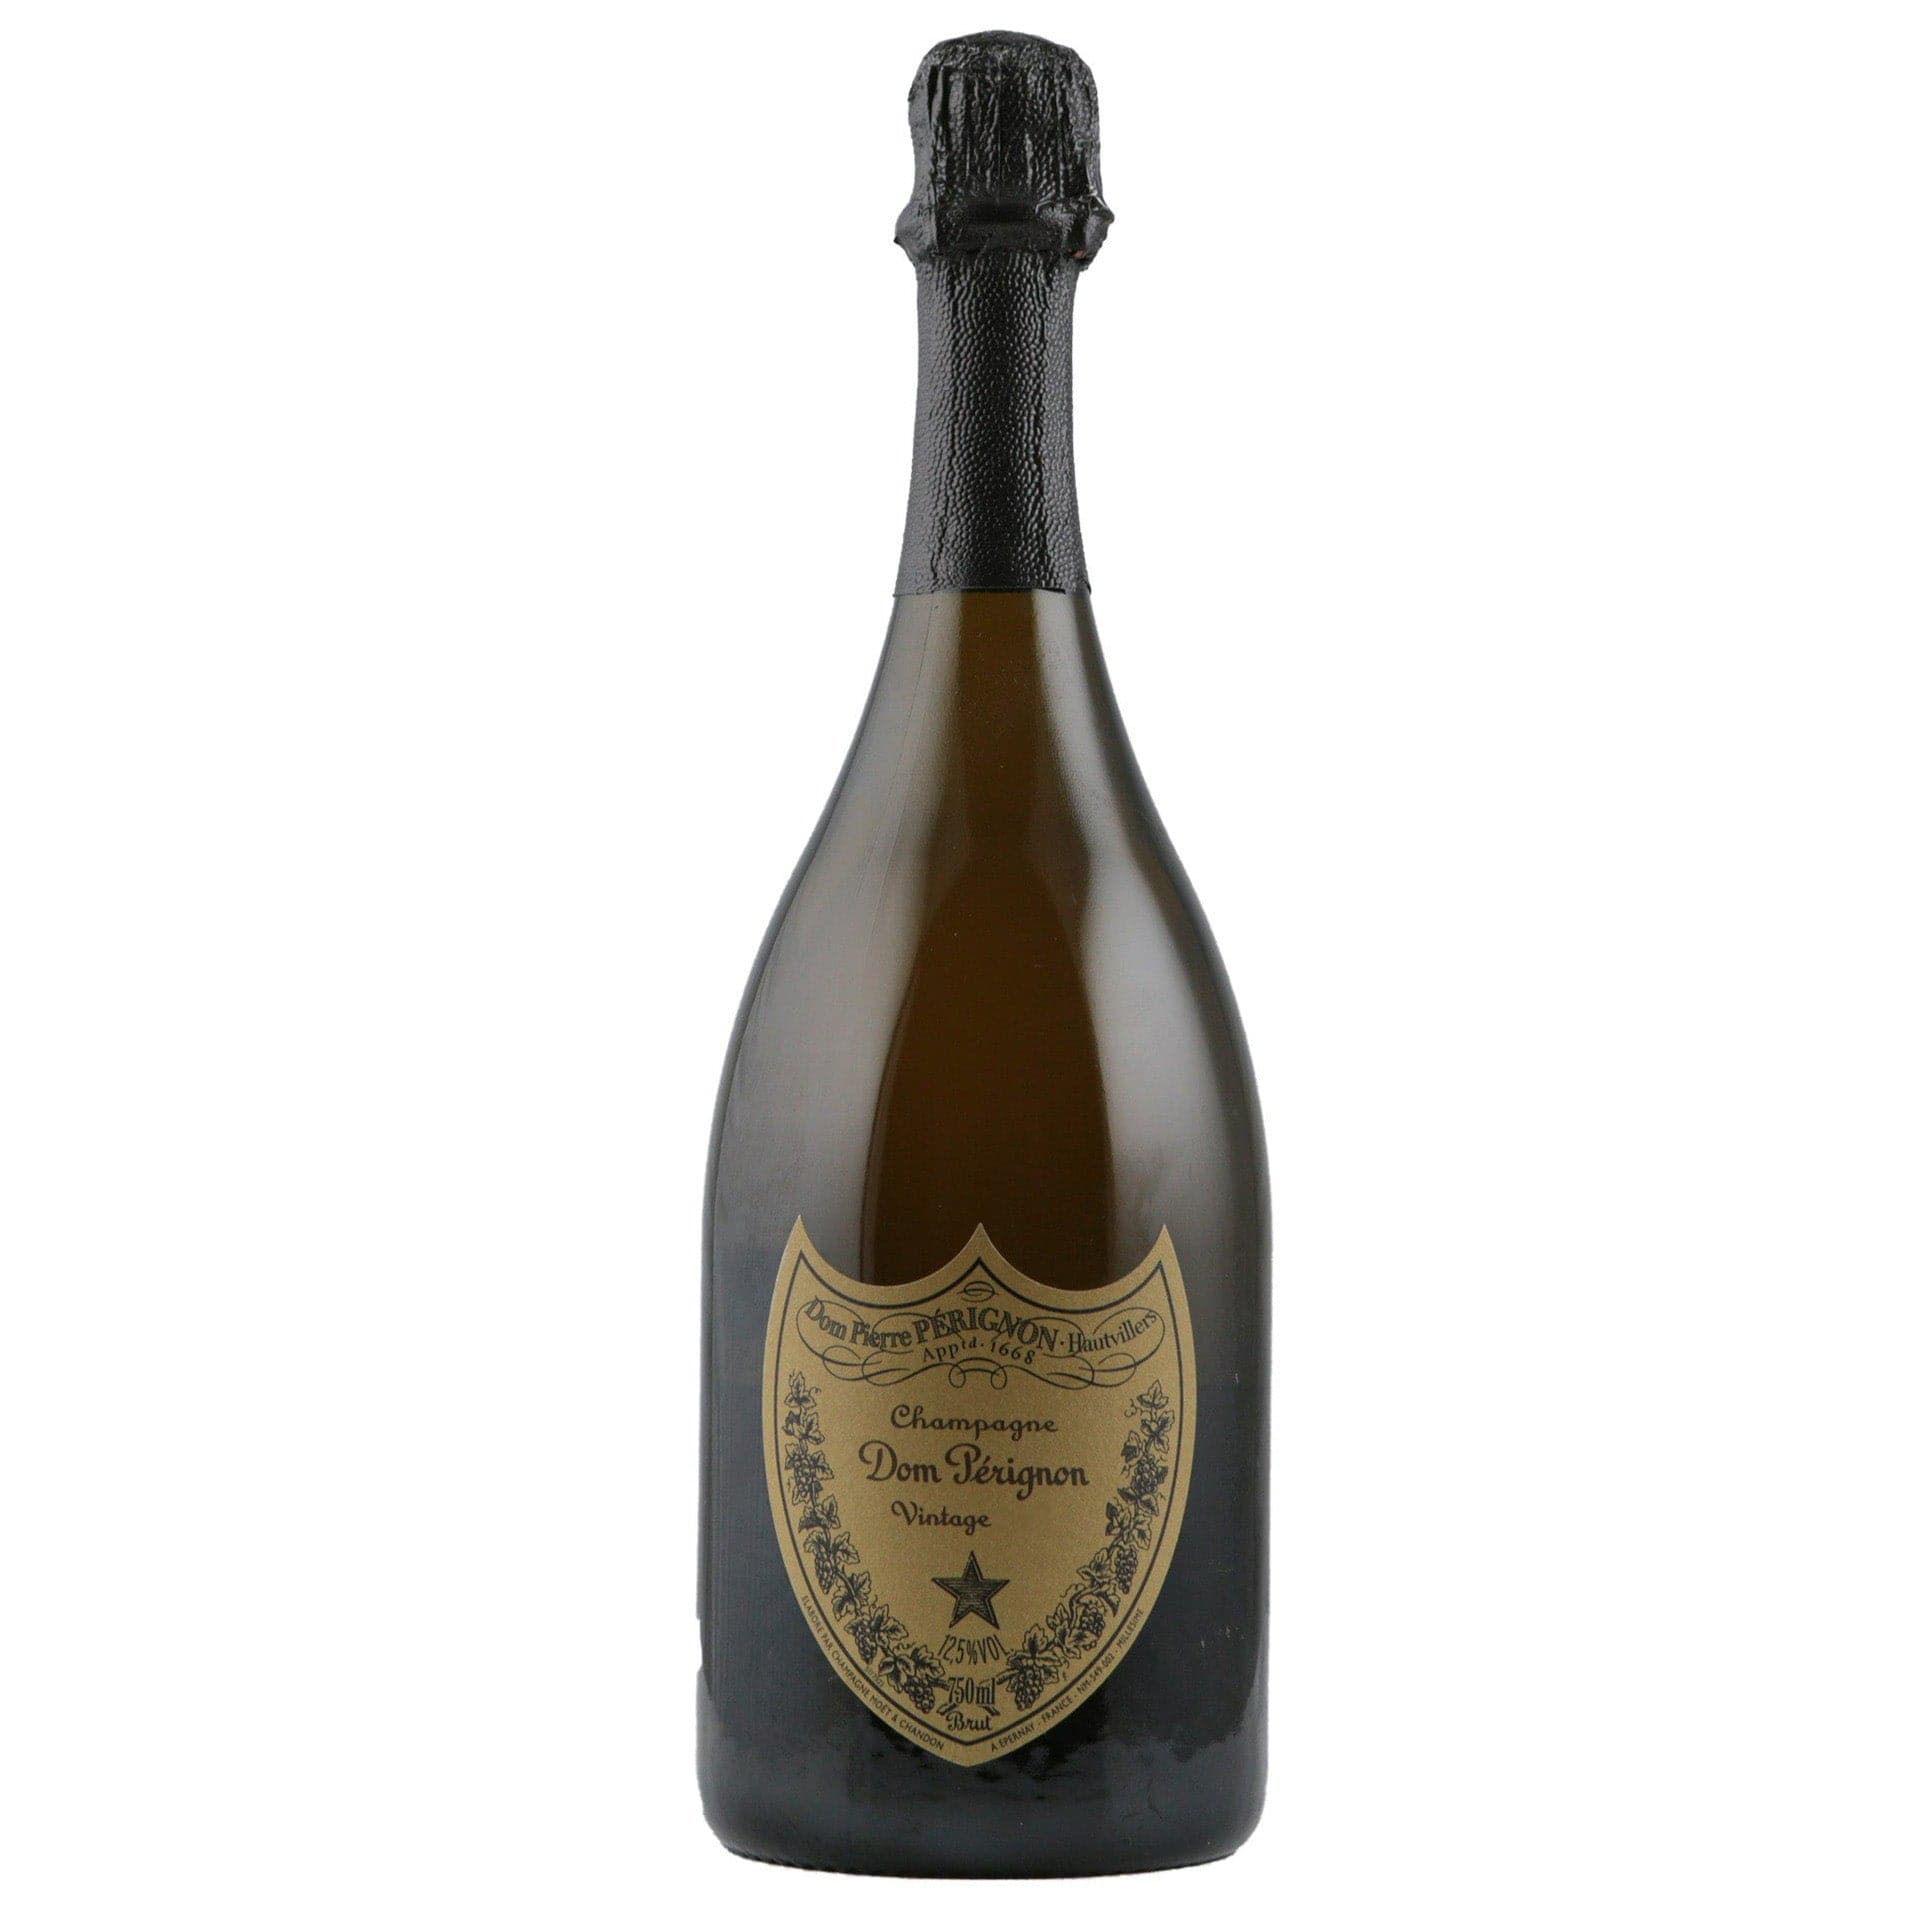 Single bottle of Sparkling wine Dom Perignon, Brut, Champagne, 2008 50% Pinot Noir & 50% Chardonnay